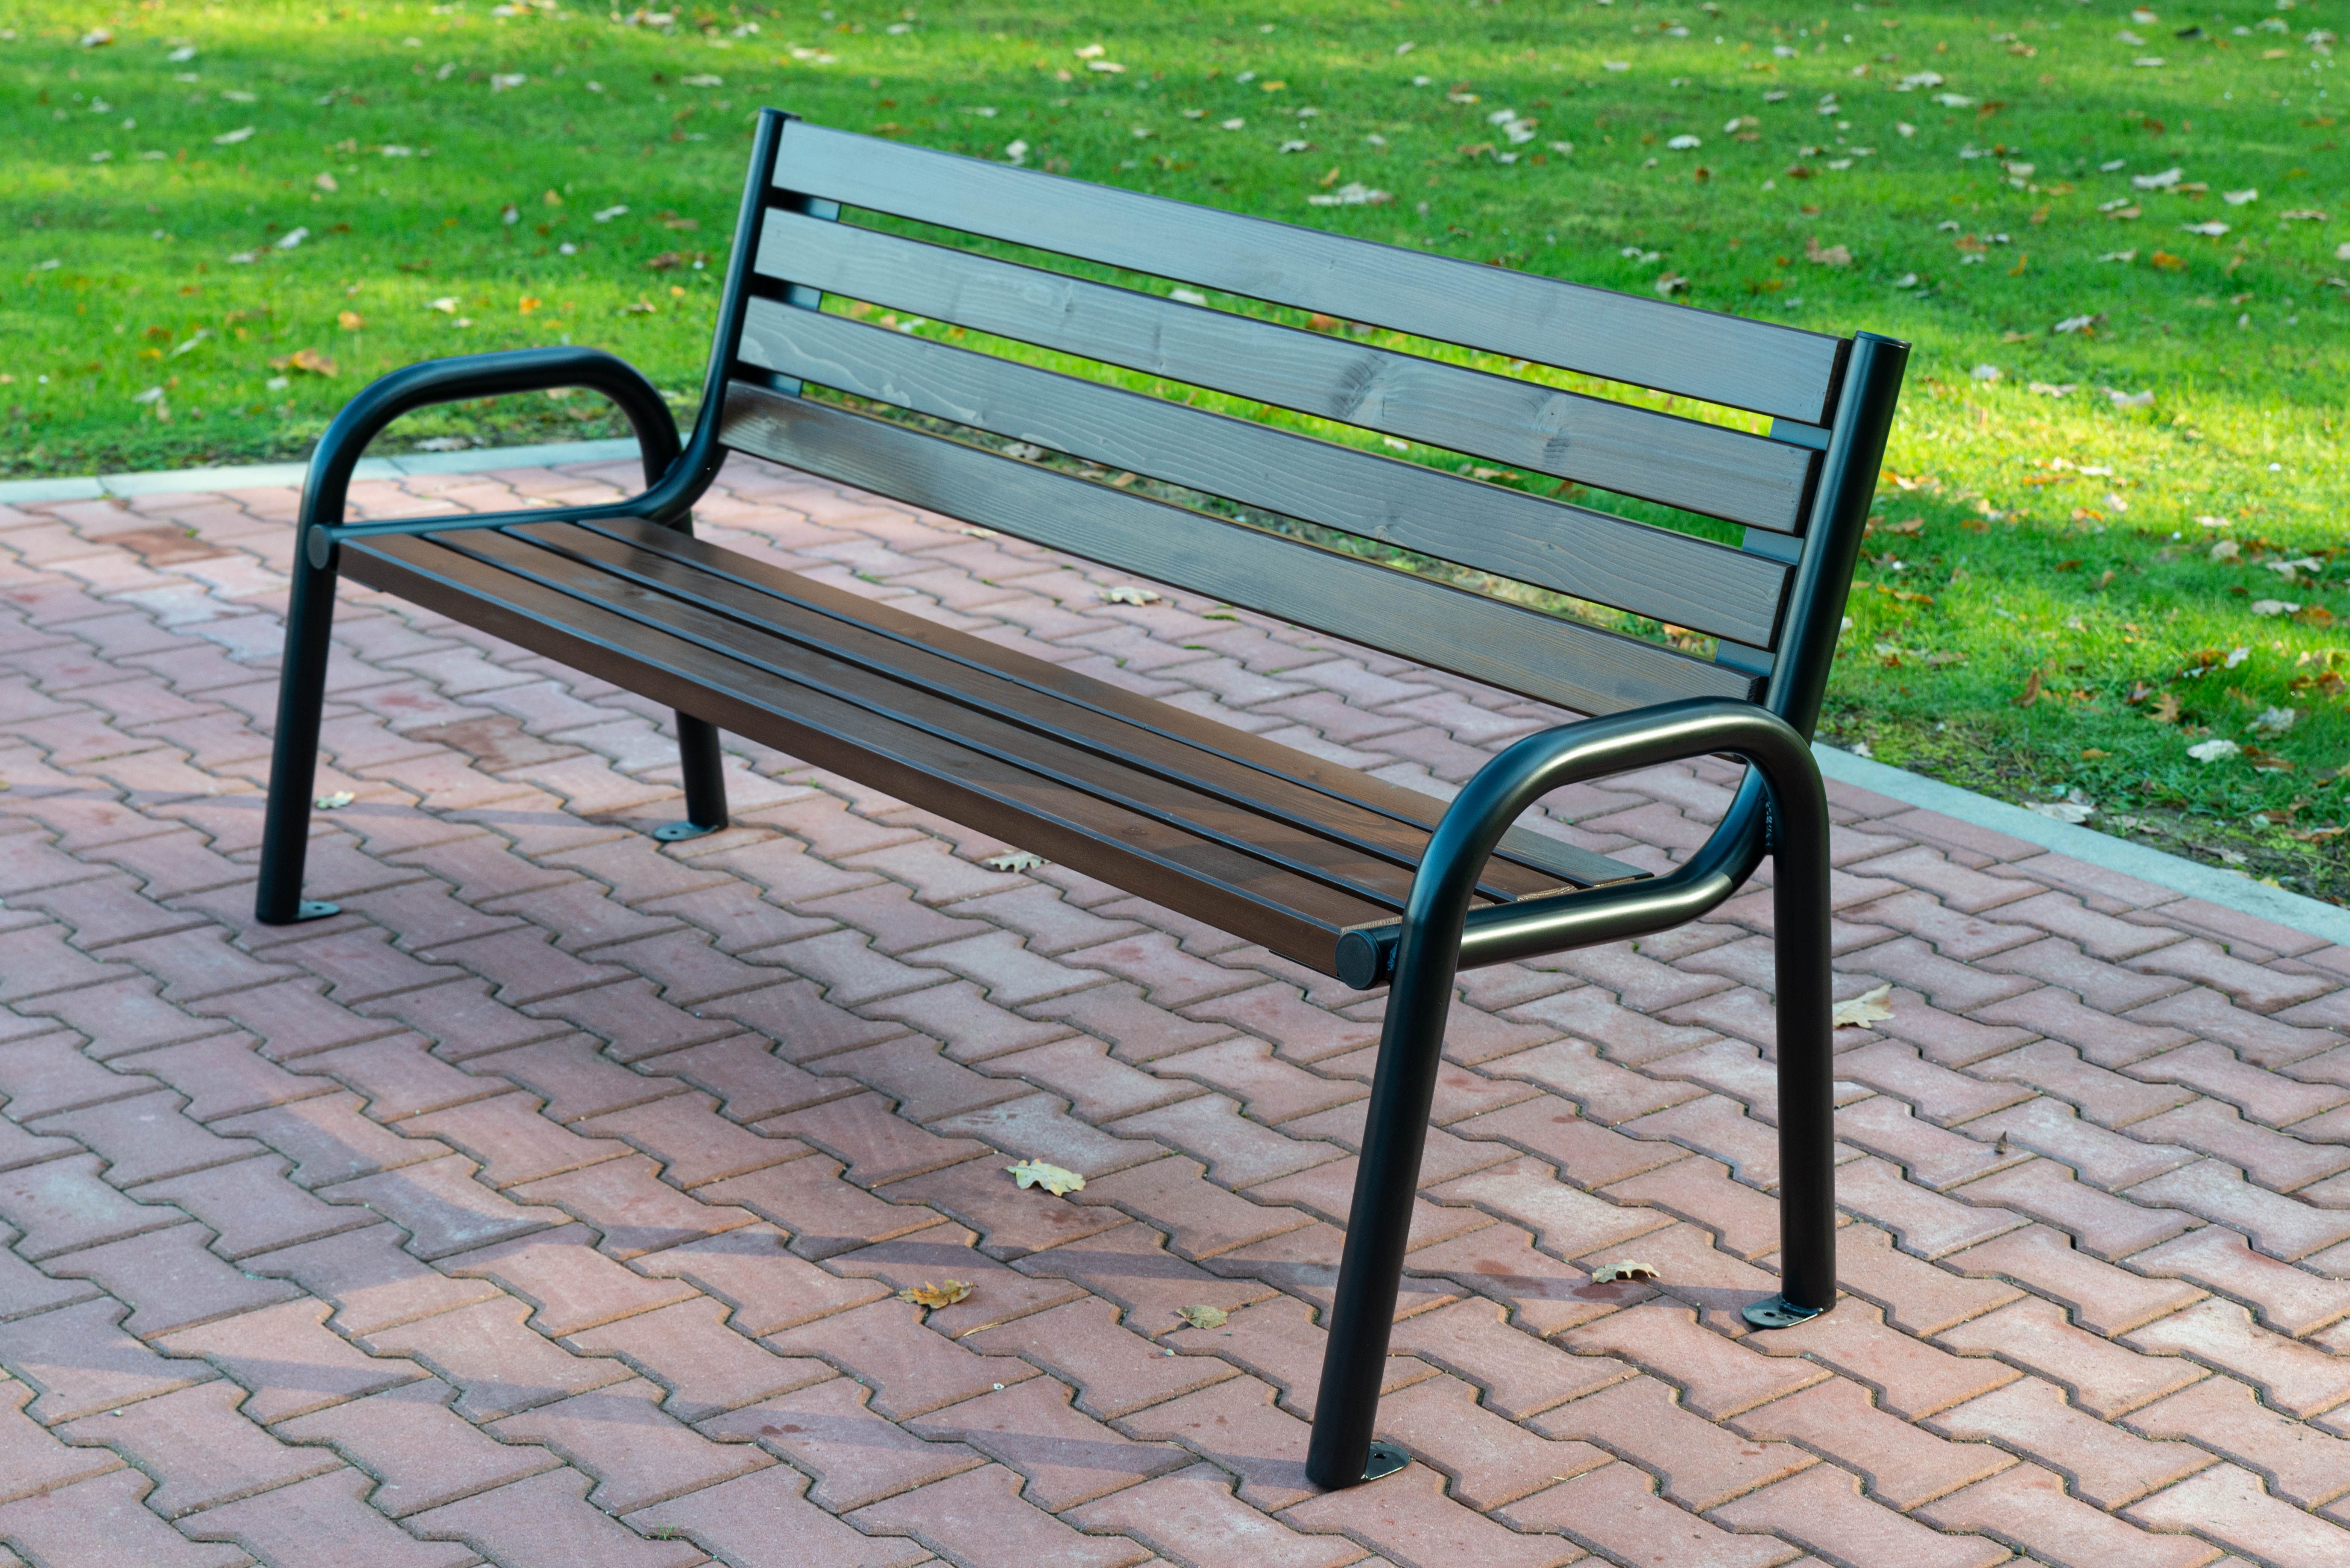 NaK Parková lavička FADO XL 180 cm W161